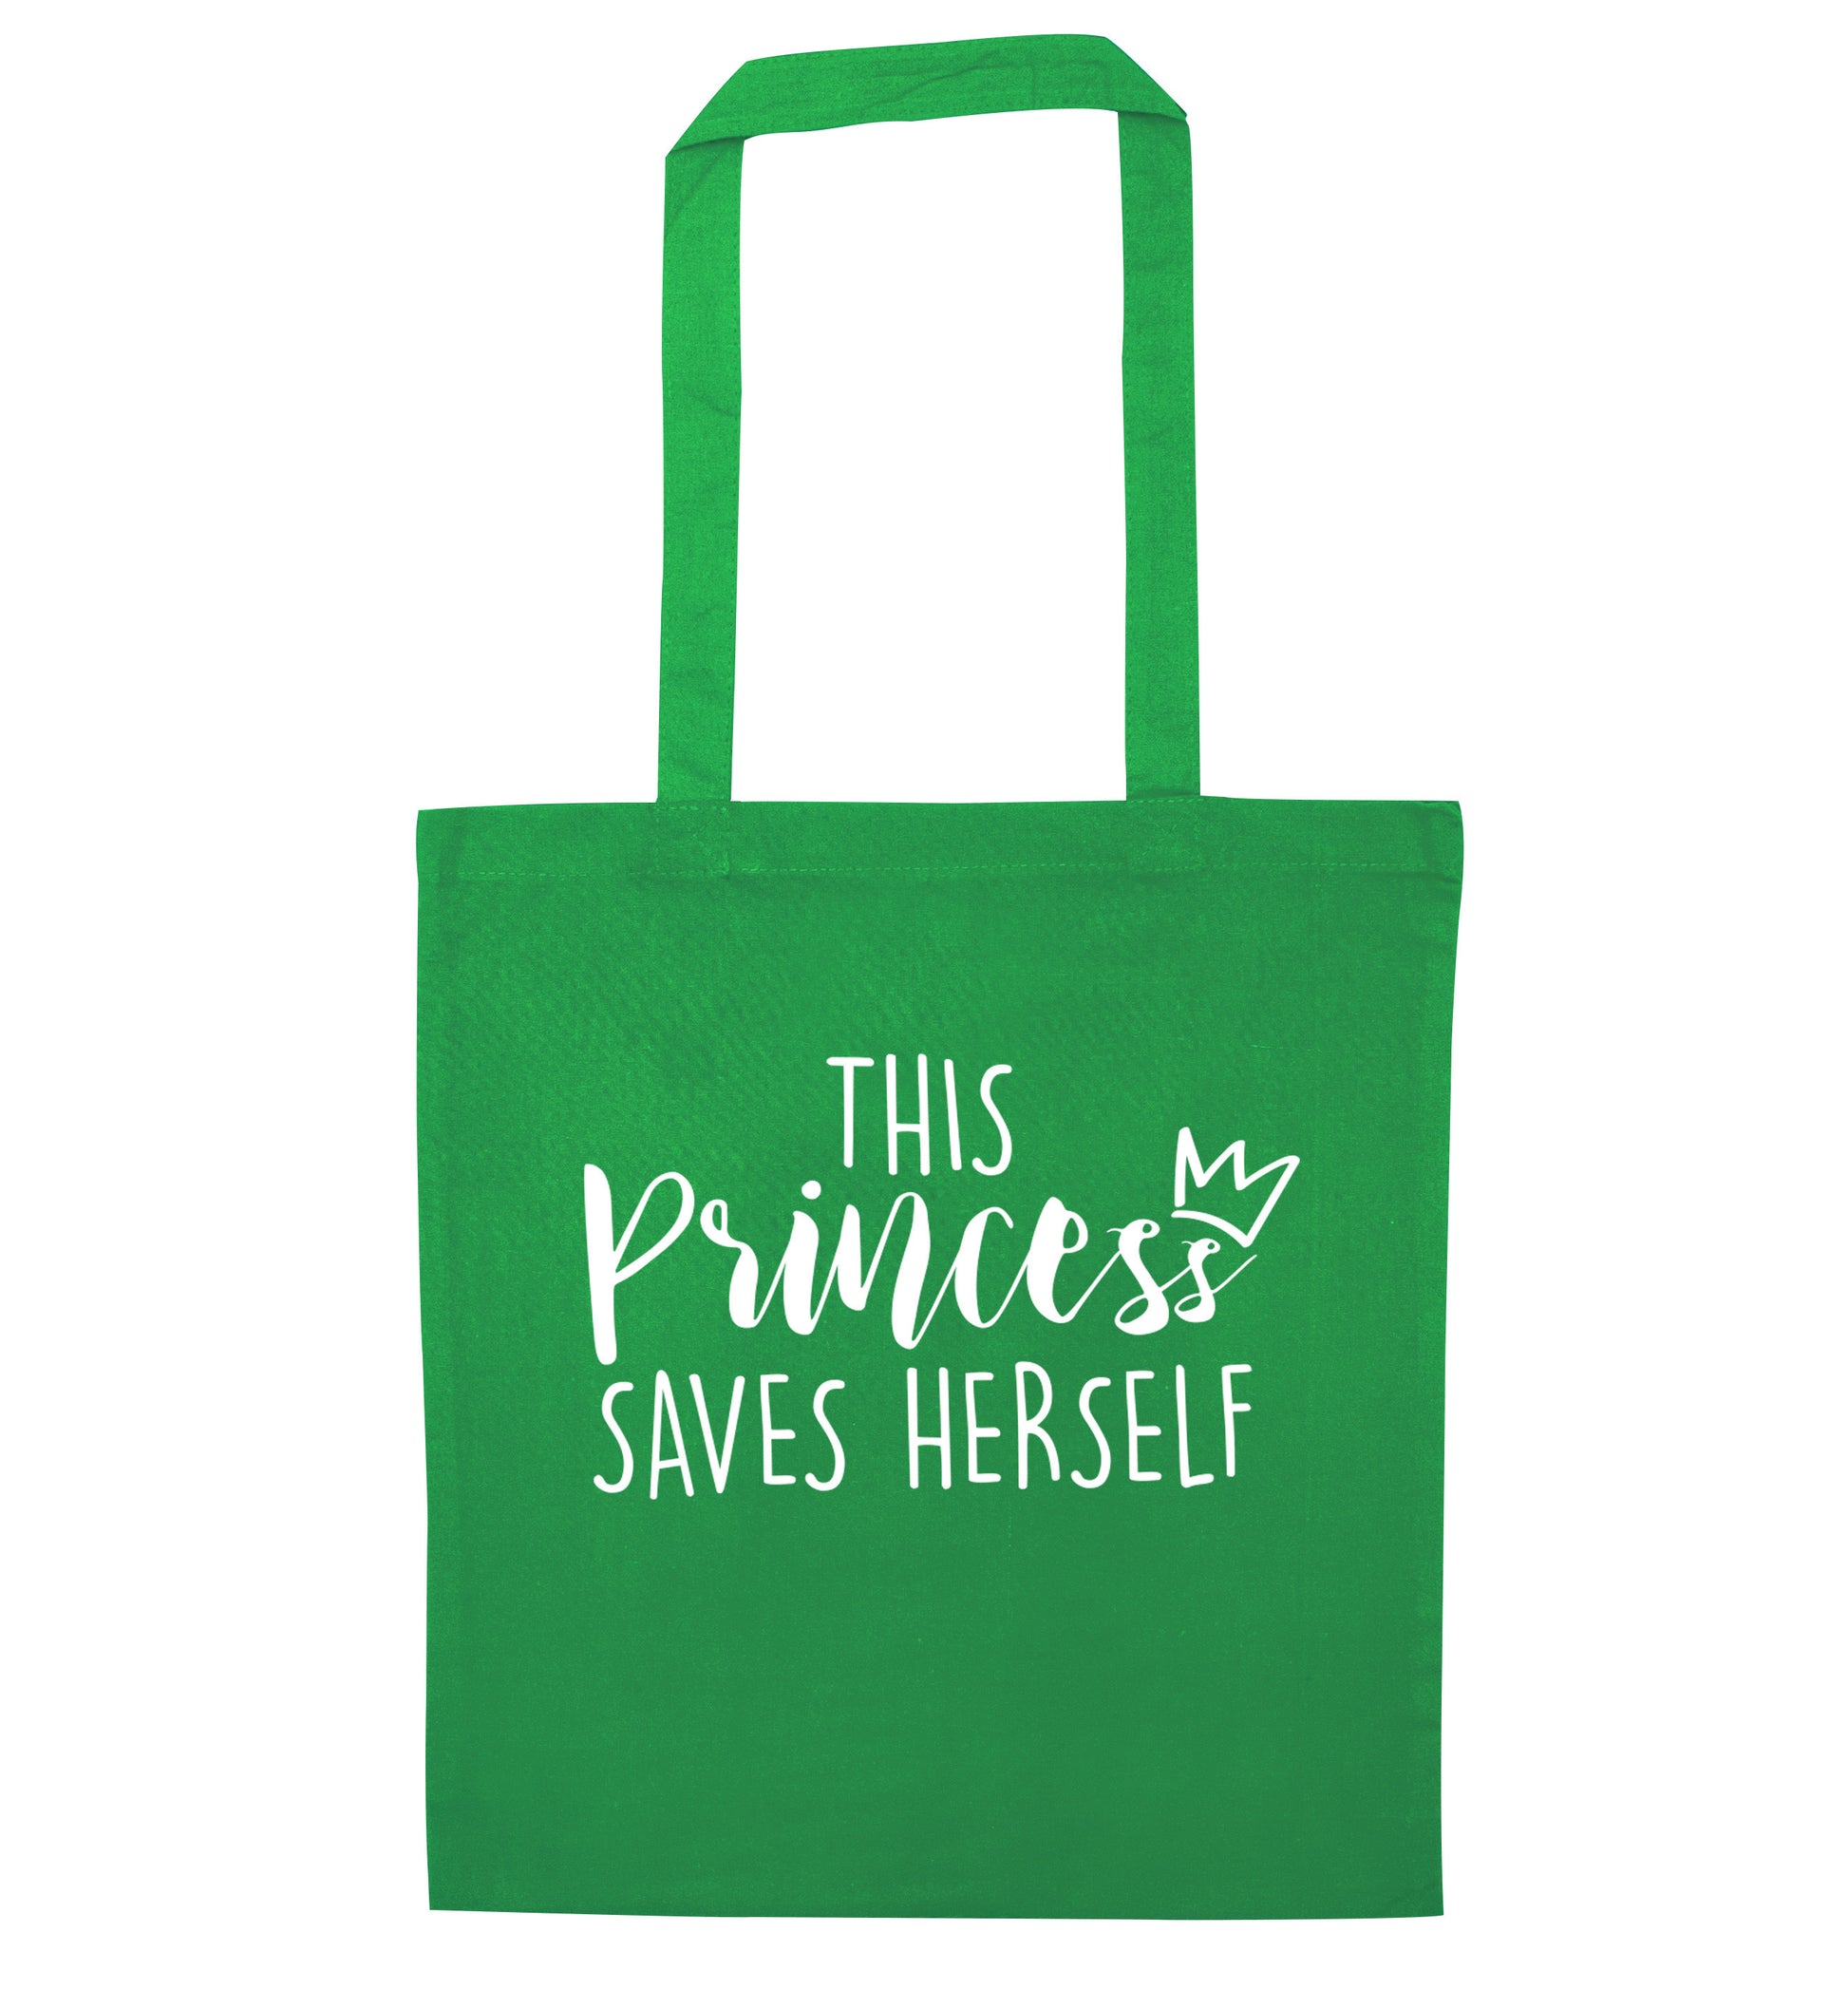 This princess saves herself green tote bag